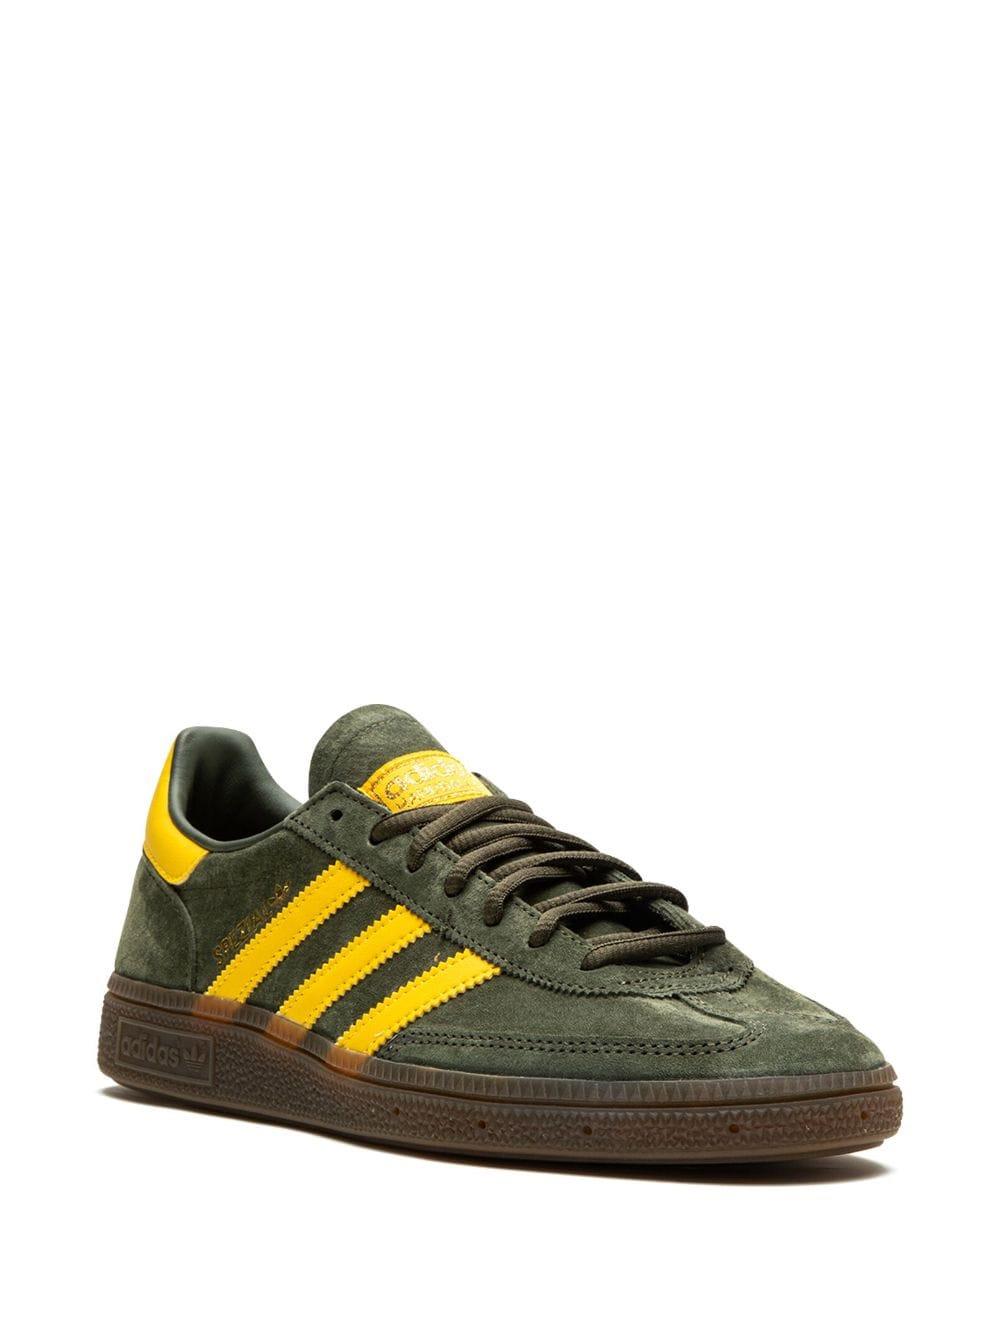 adidas Handball Spezial "Tri/Yellow" sneakers - Green